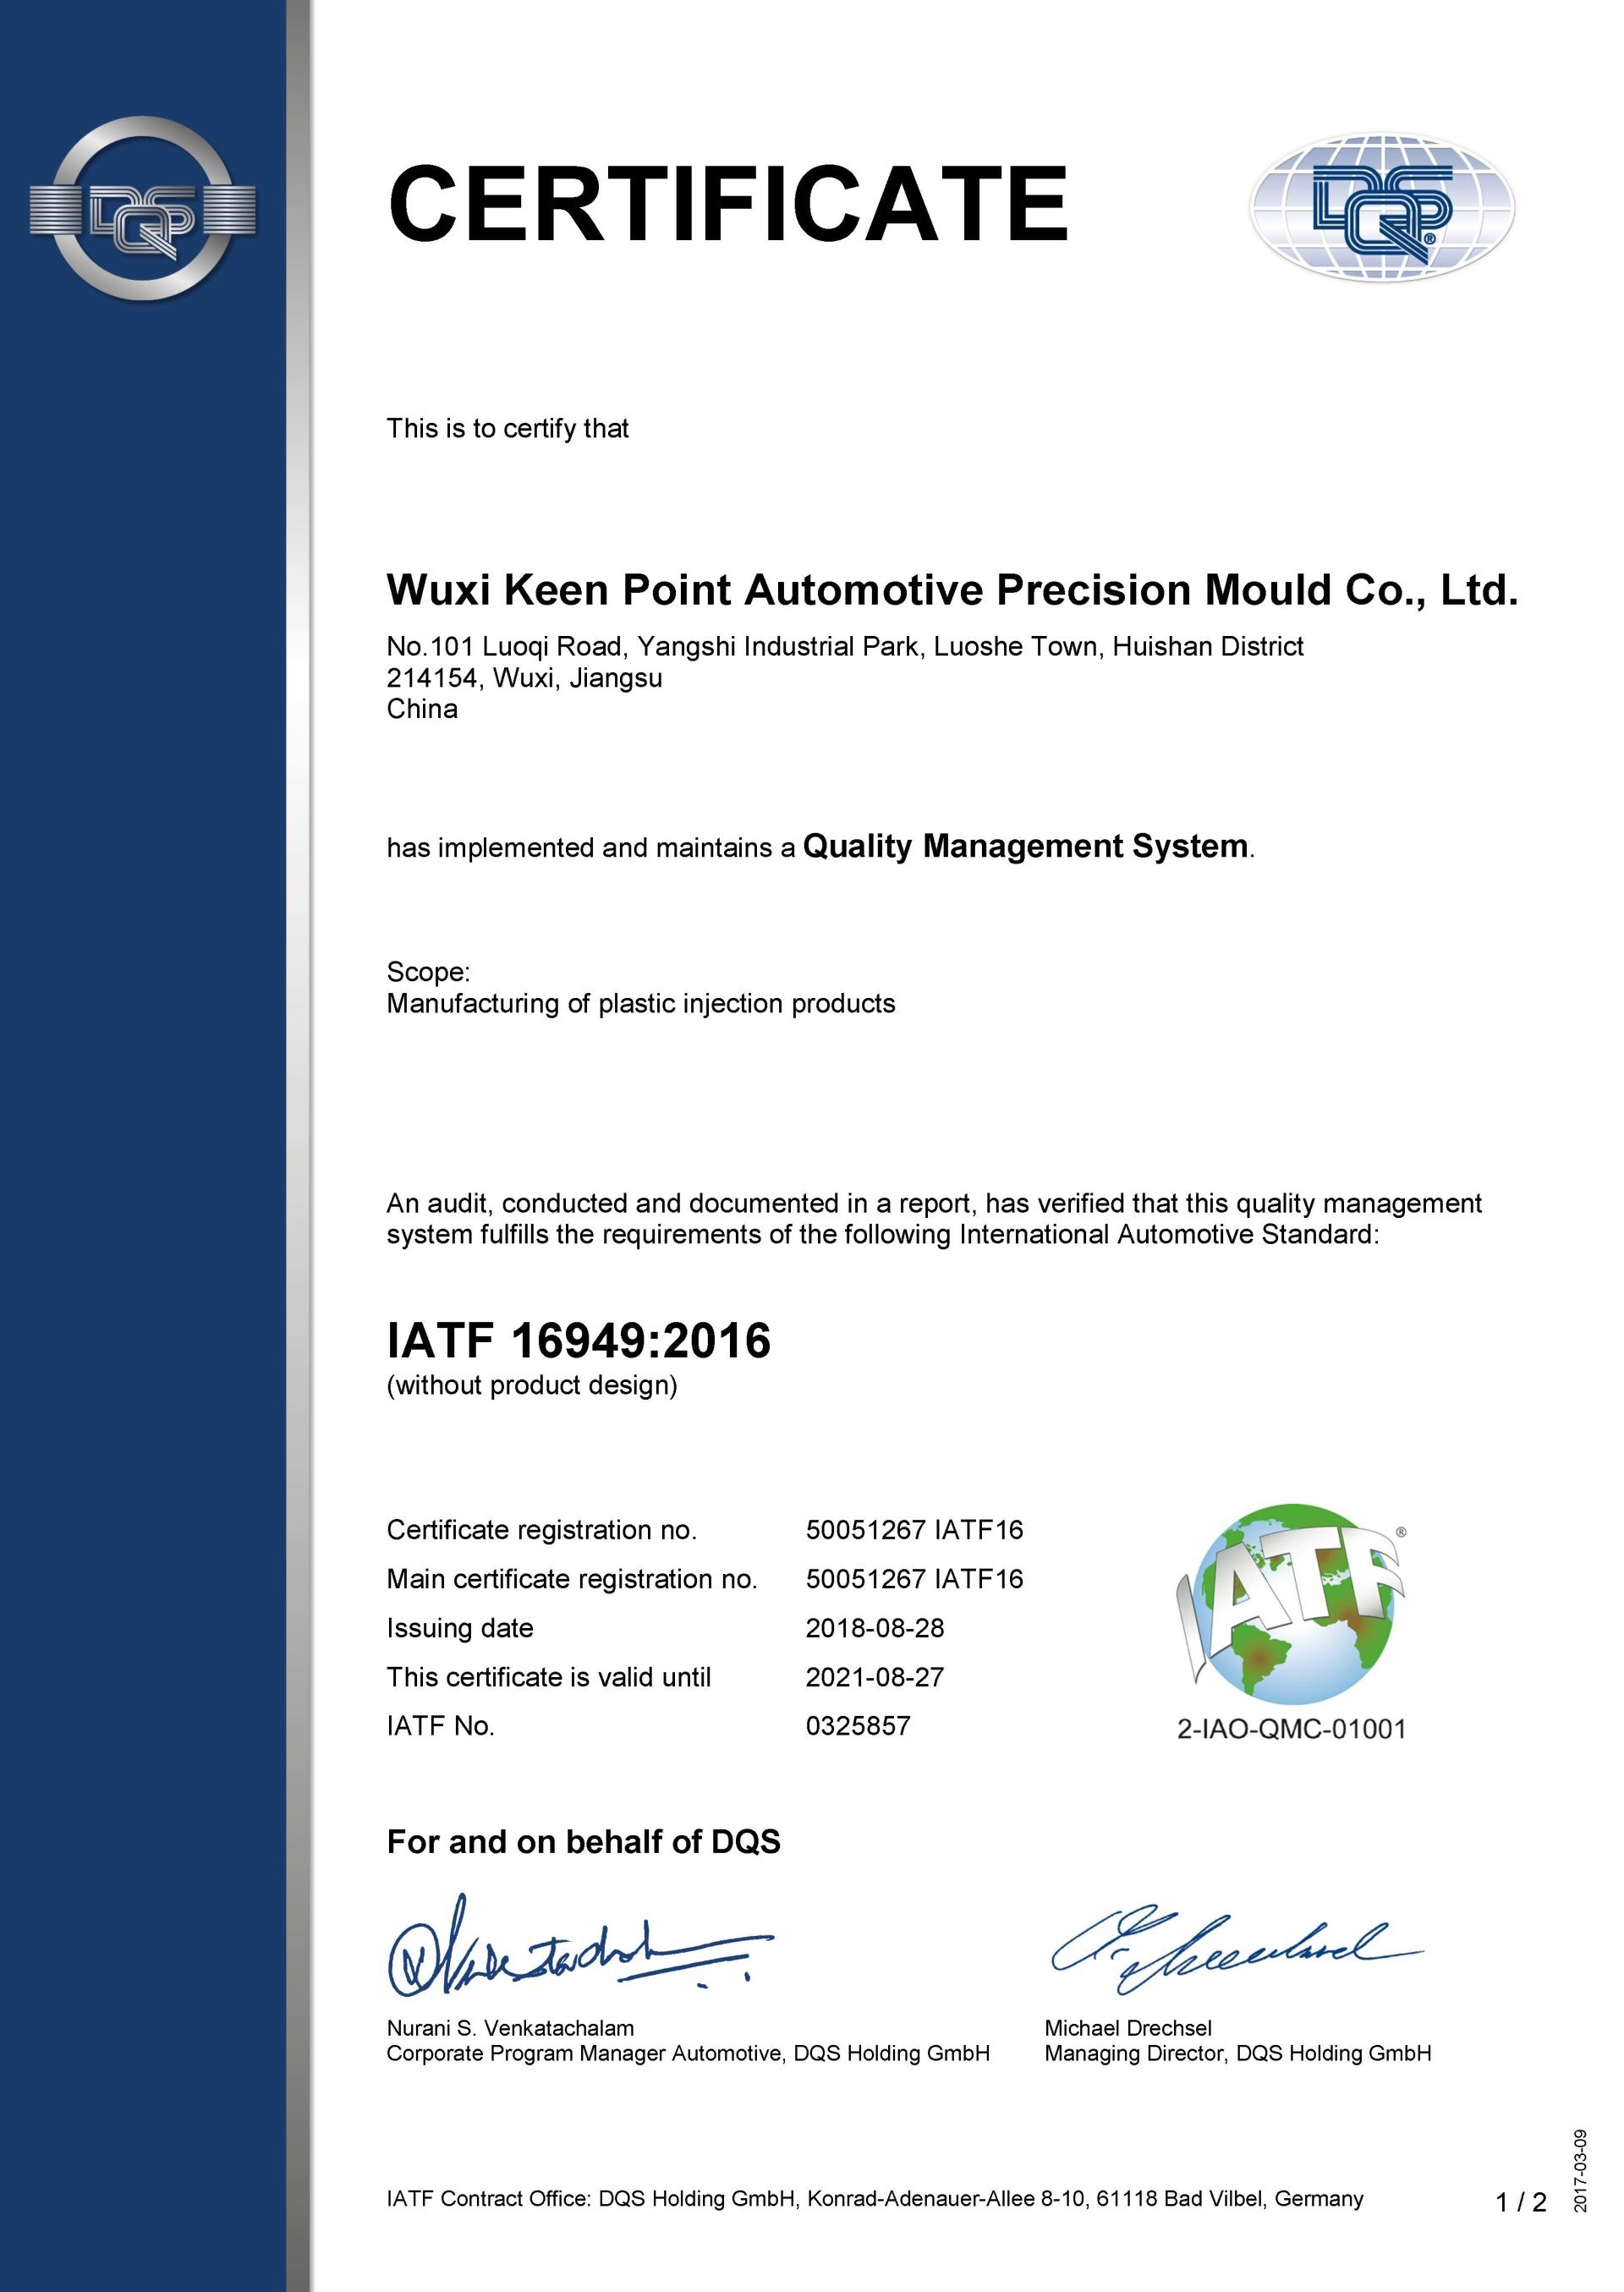 IATF 16949 Certificate of Wuxi Keen Point Automotive Precision Mould Co., Ltd.